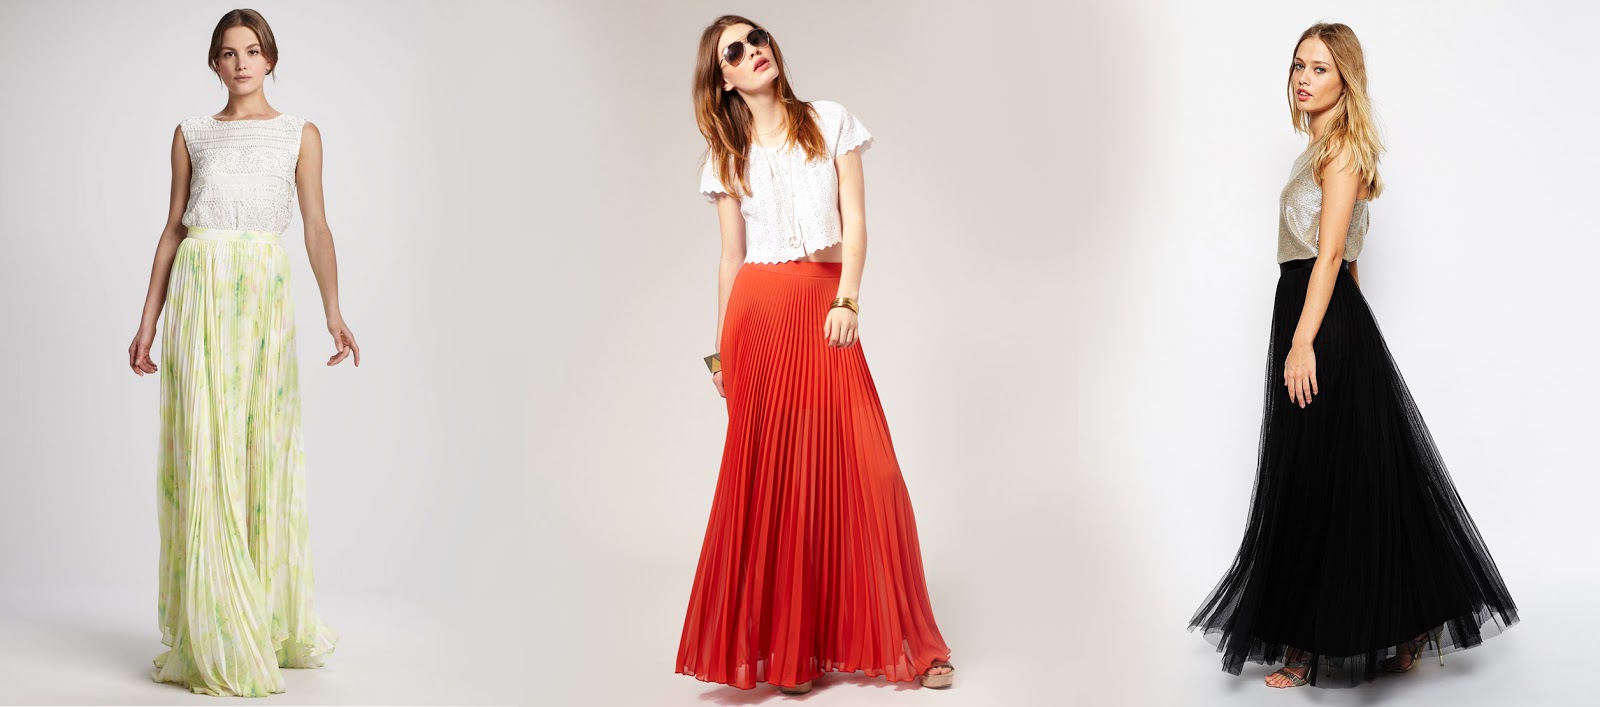 Eniwhere Fashion - Maxi skirt 2015